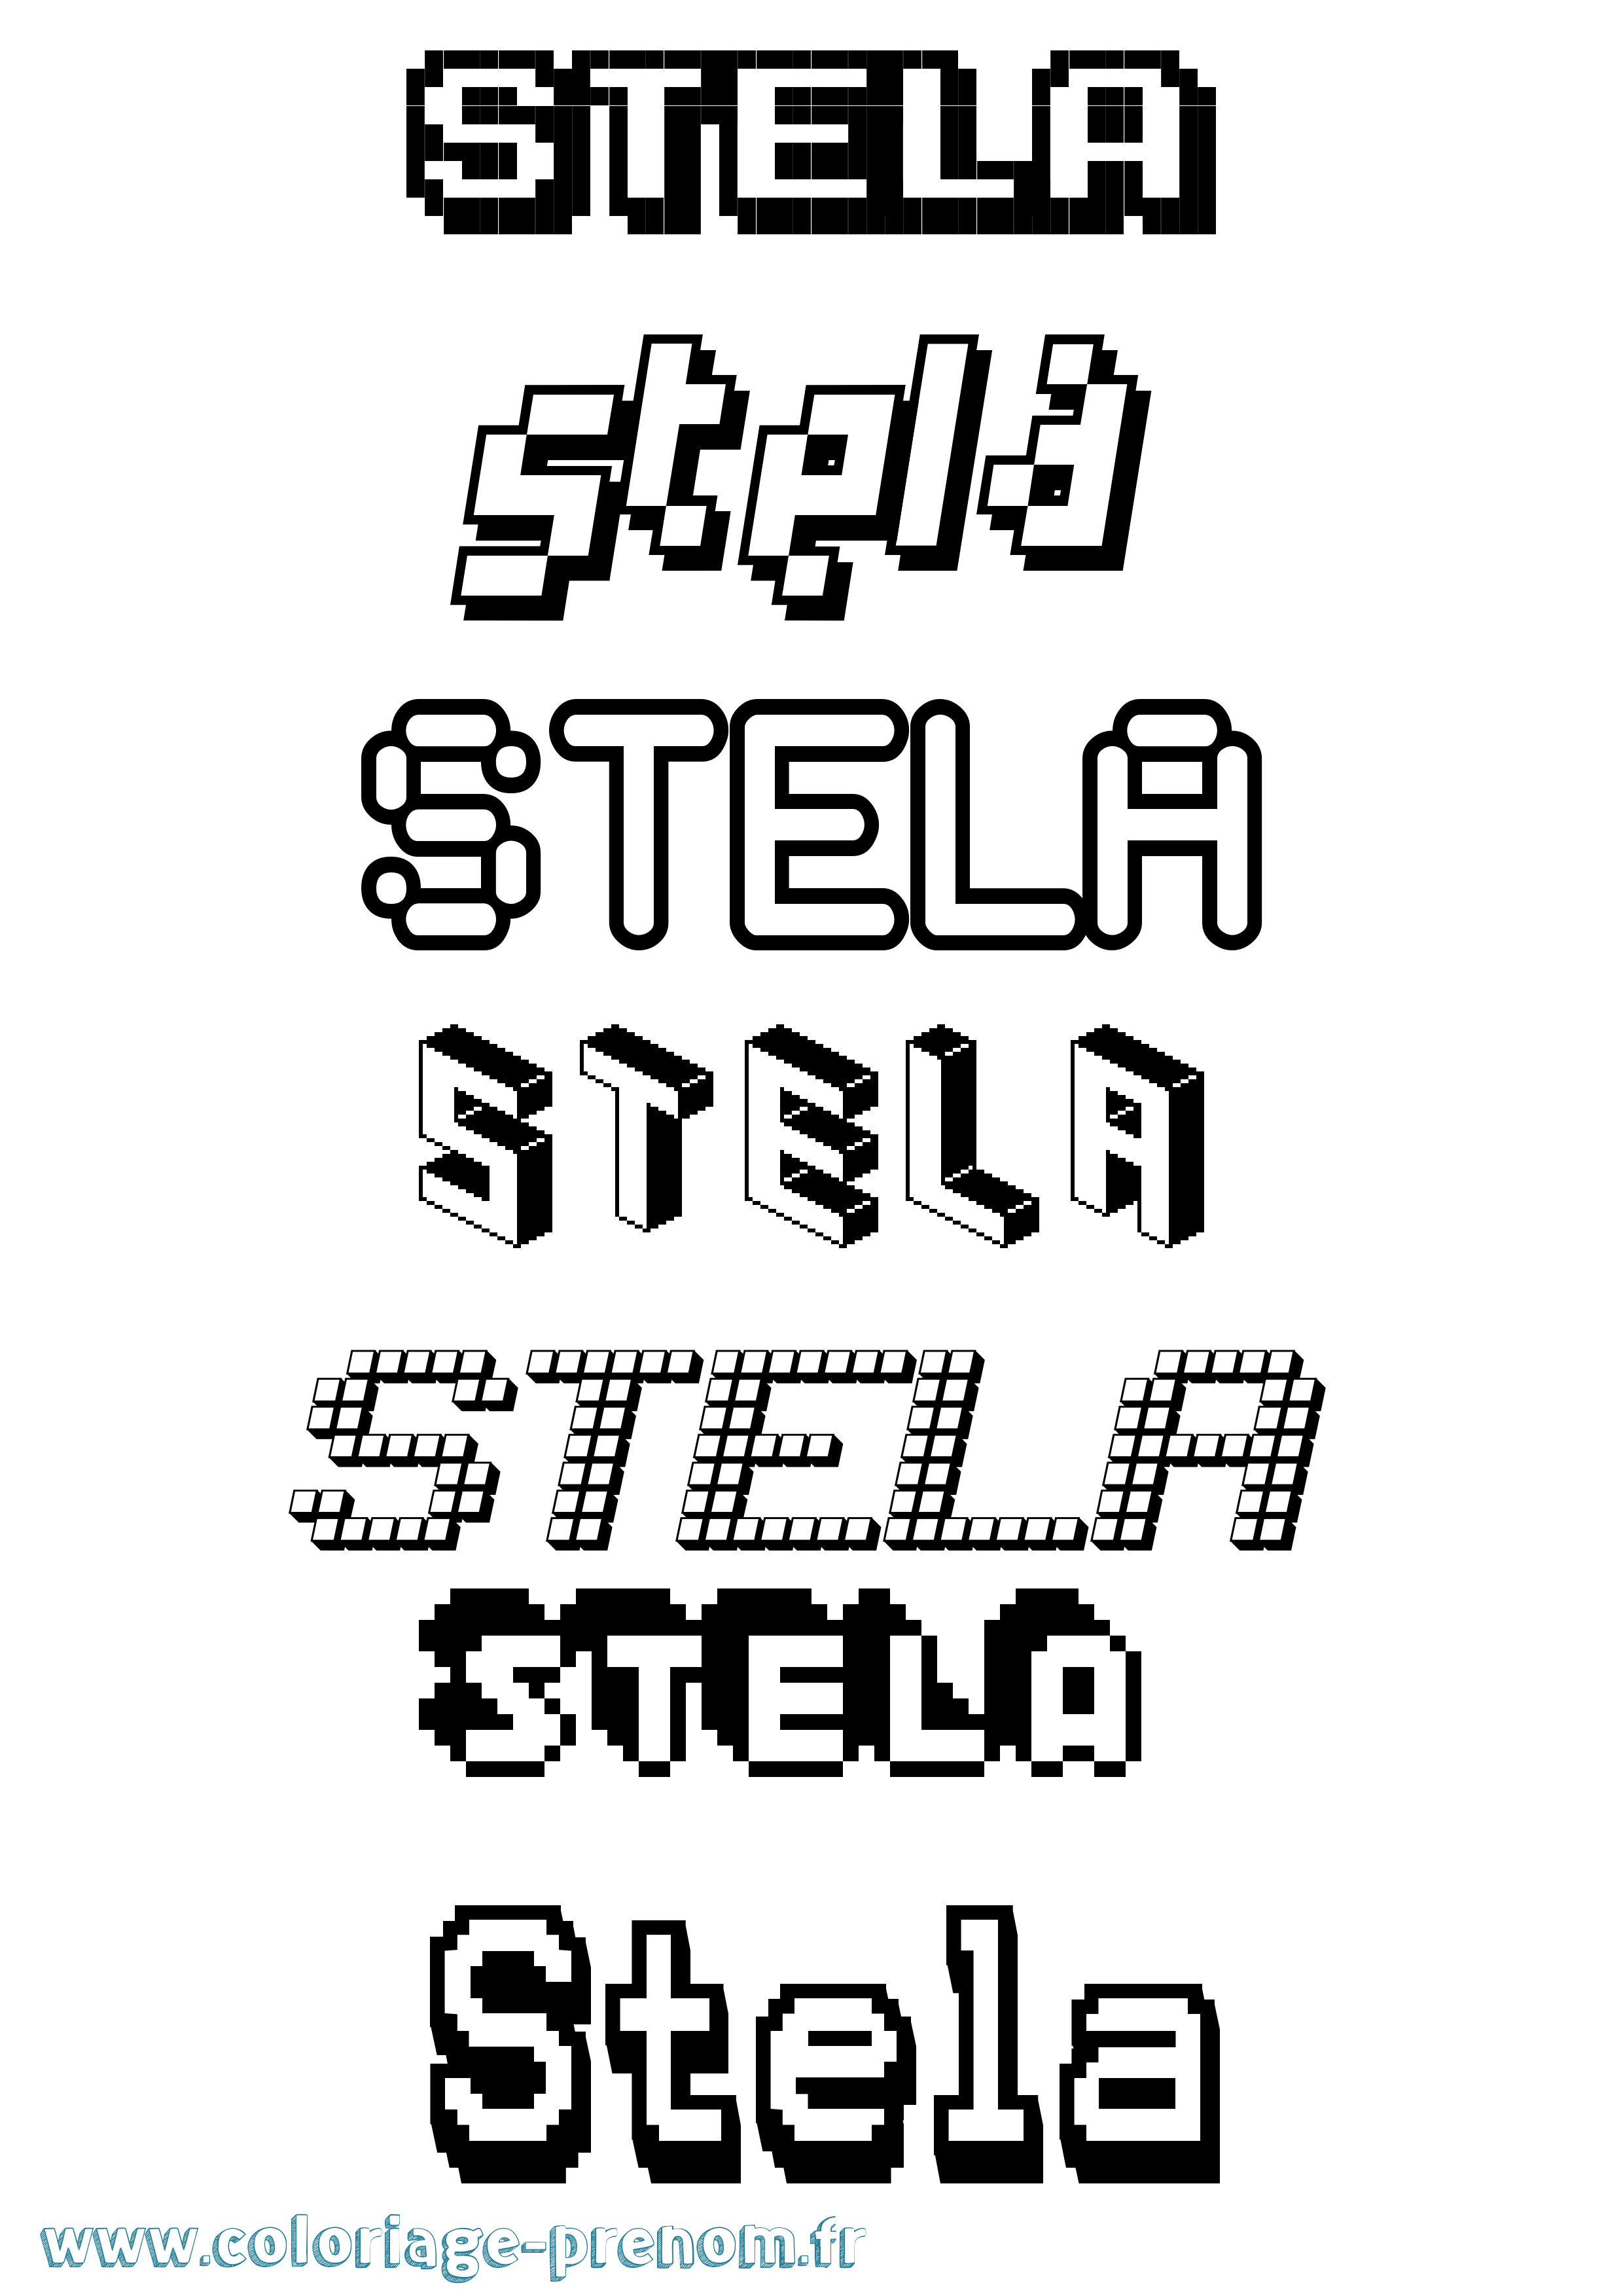 Coloriage prénom Stela Pixel